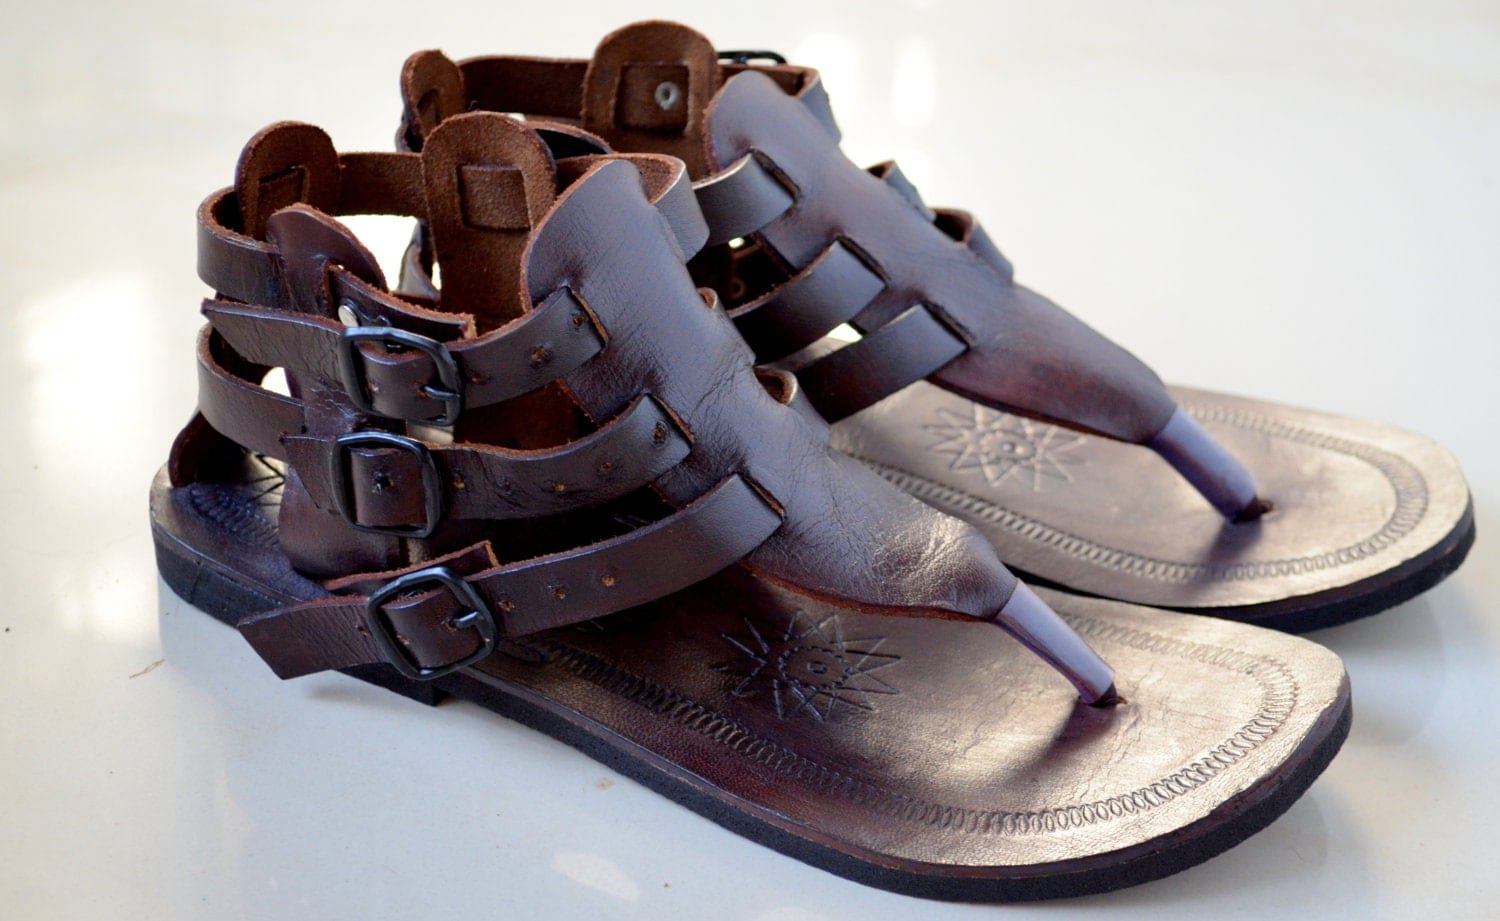 Gladiator Sandals For Men 2013 Gladiator inspired leather